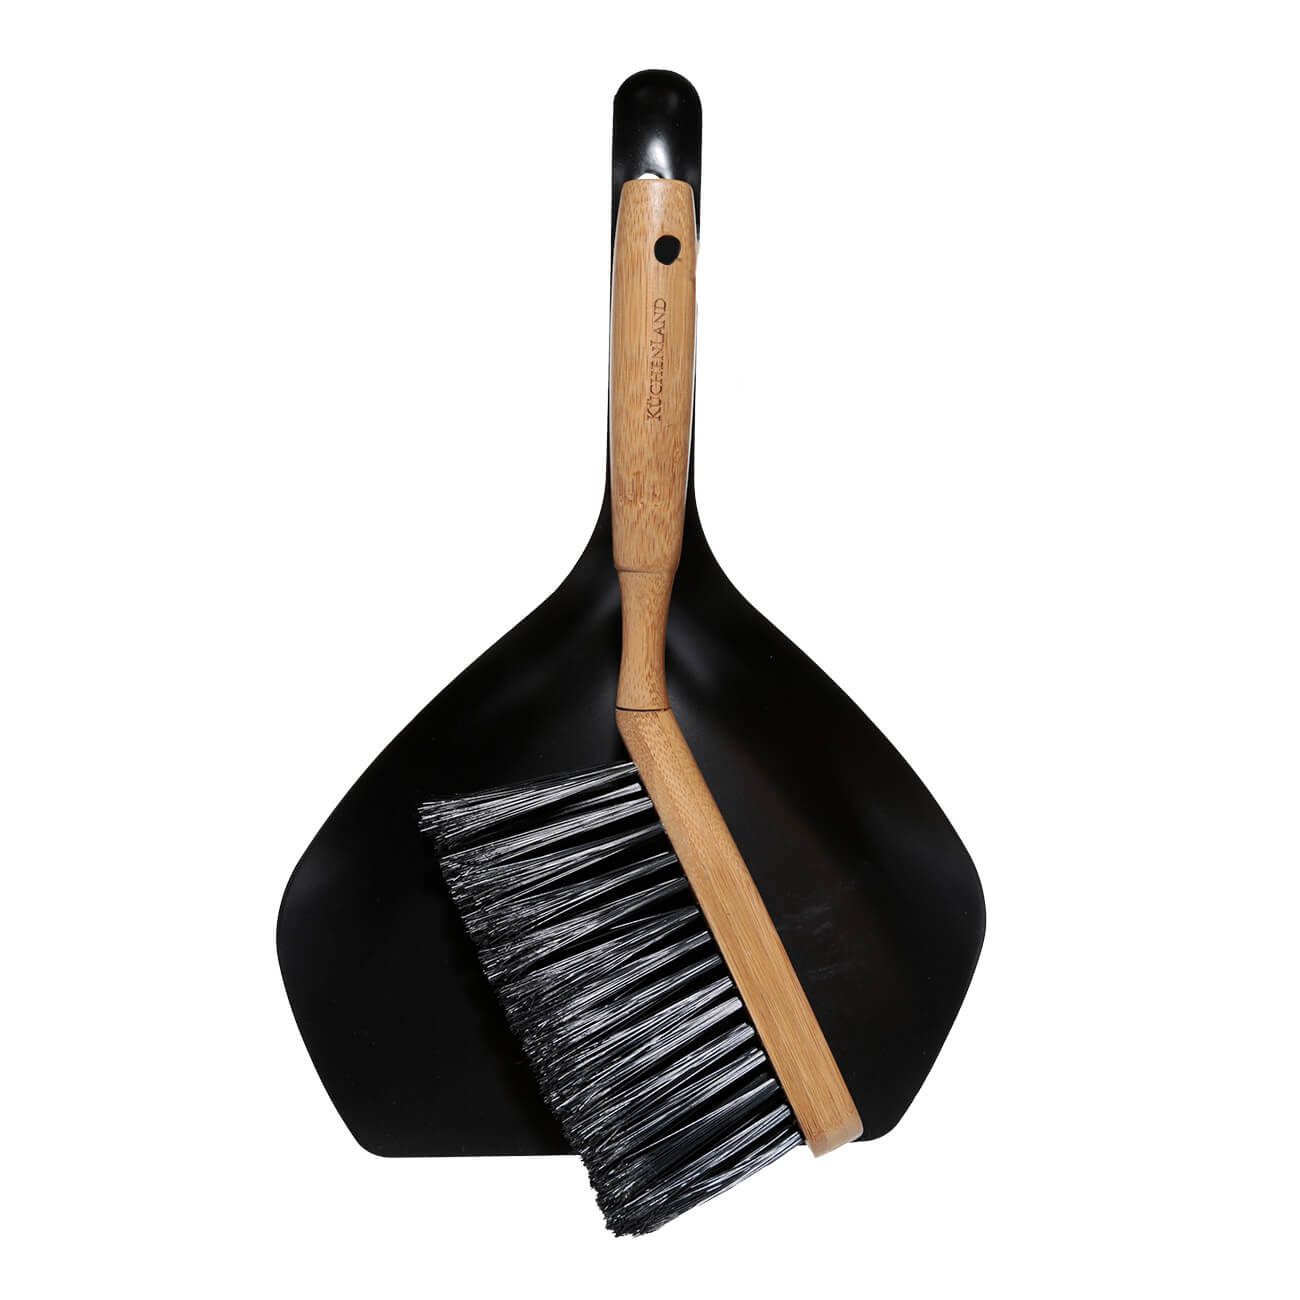 Щетка для мусора, с совком, 33 см, пластик/бамбук/сталь, черная, Black clean шкатулка бамбук